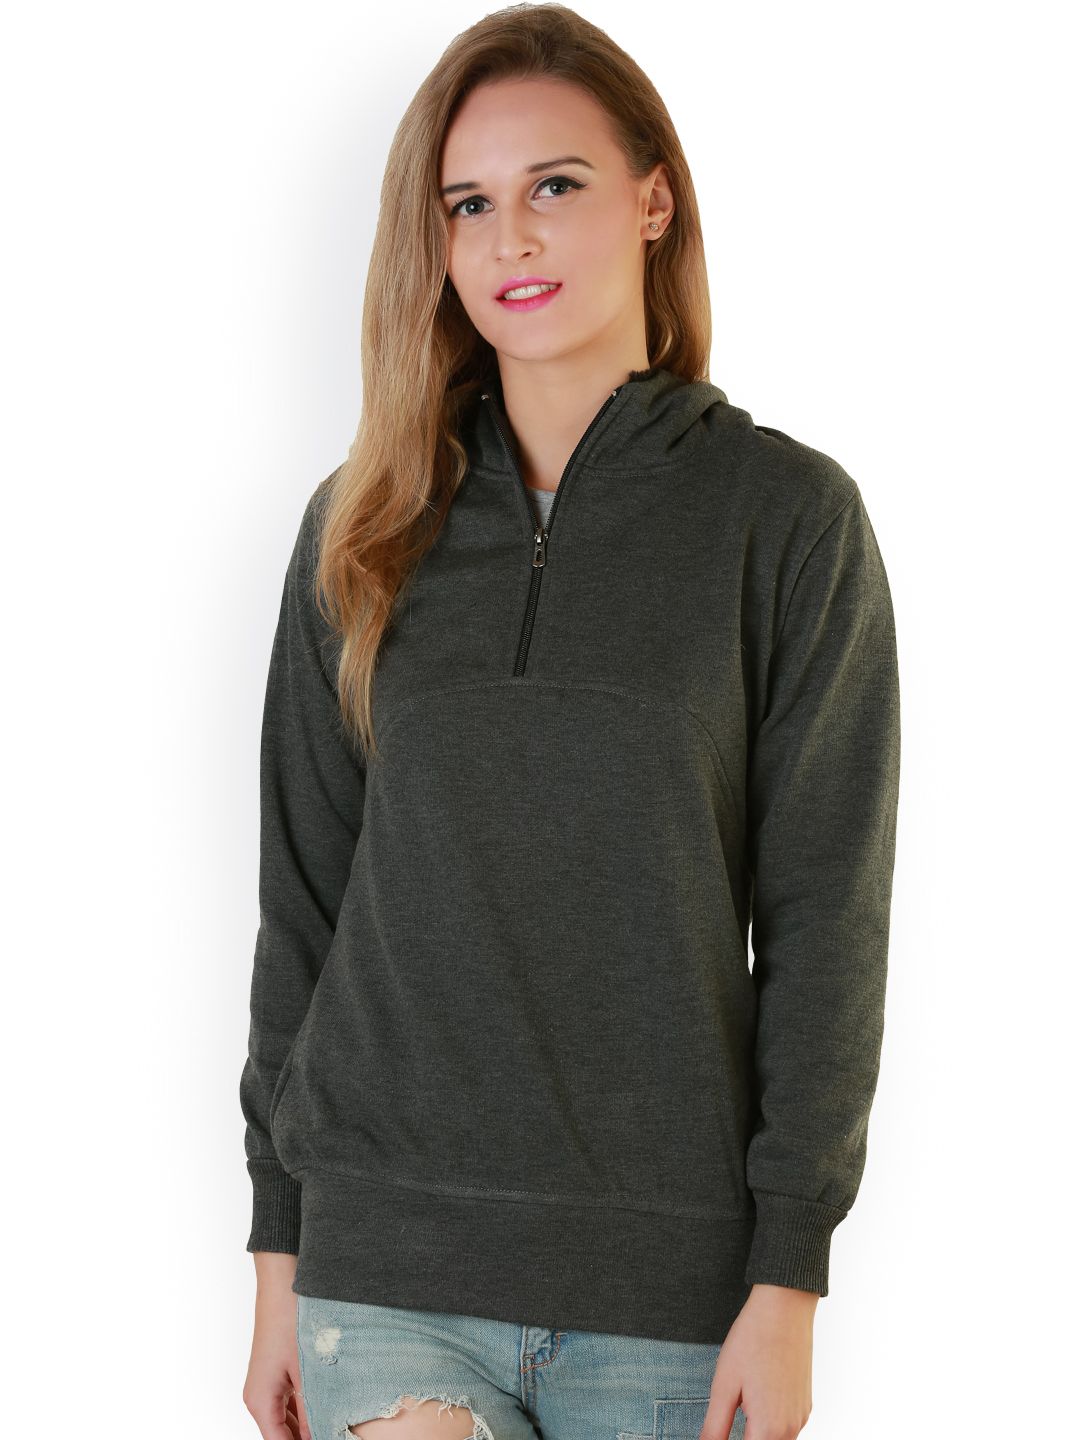 Belle Fille Grey Hooded Sweatshirt Price in India